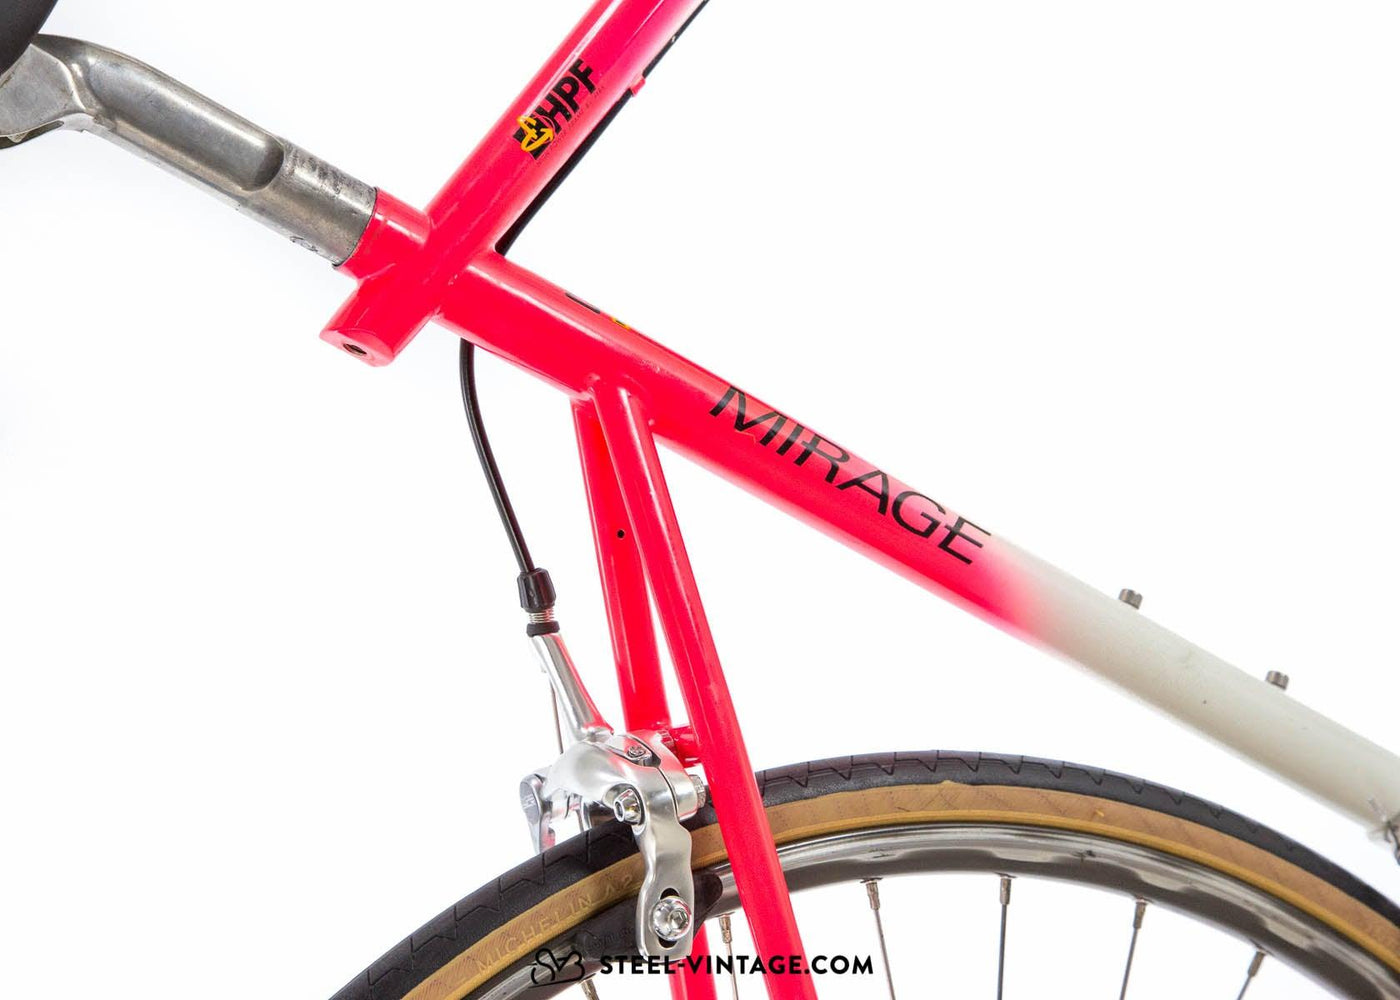 MBK Mirage Classic Road Bike 1990s - Steel Vintage Bikes